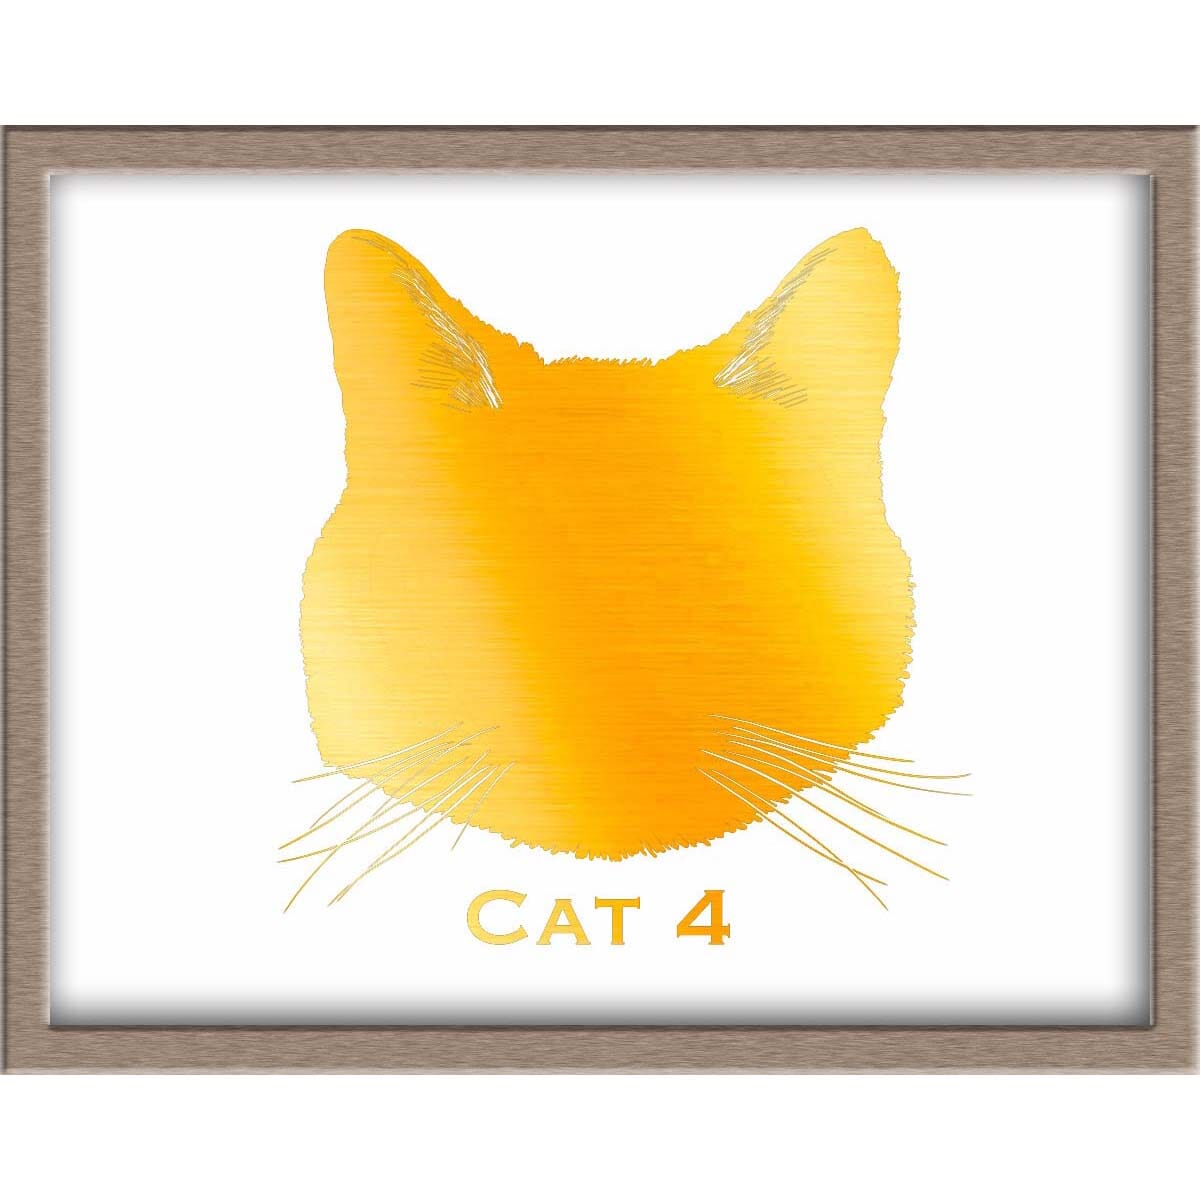 Cat Silhouette Foiled Print (Style 4) Posters, Prints, & Visual Artwork JoyousJoyfulJoyness 